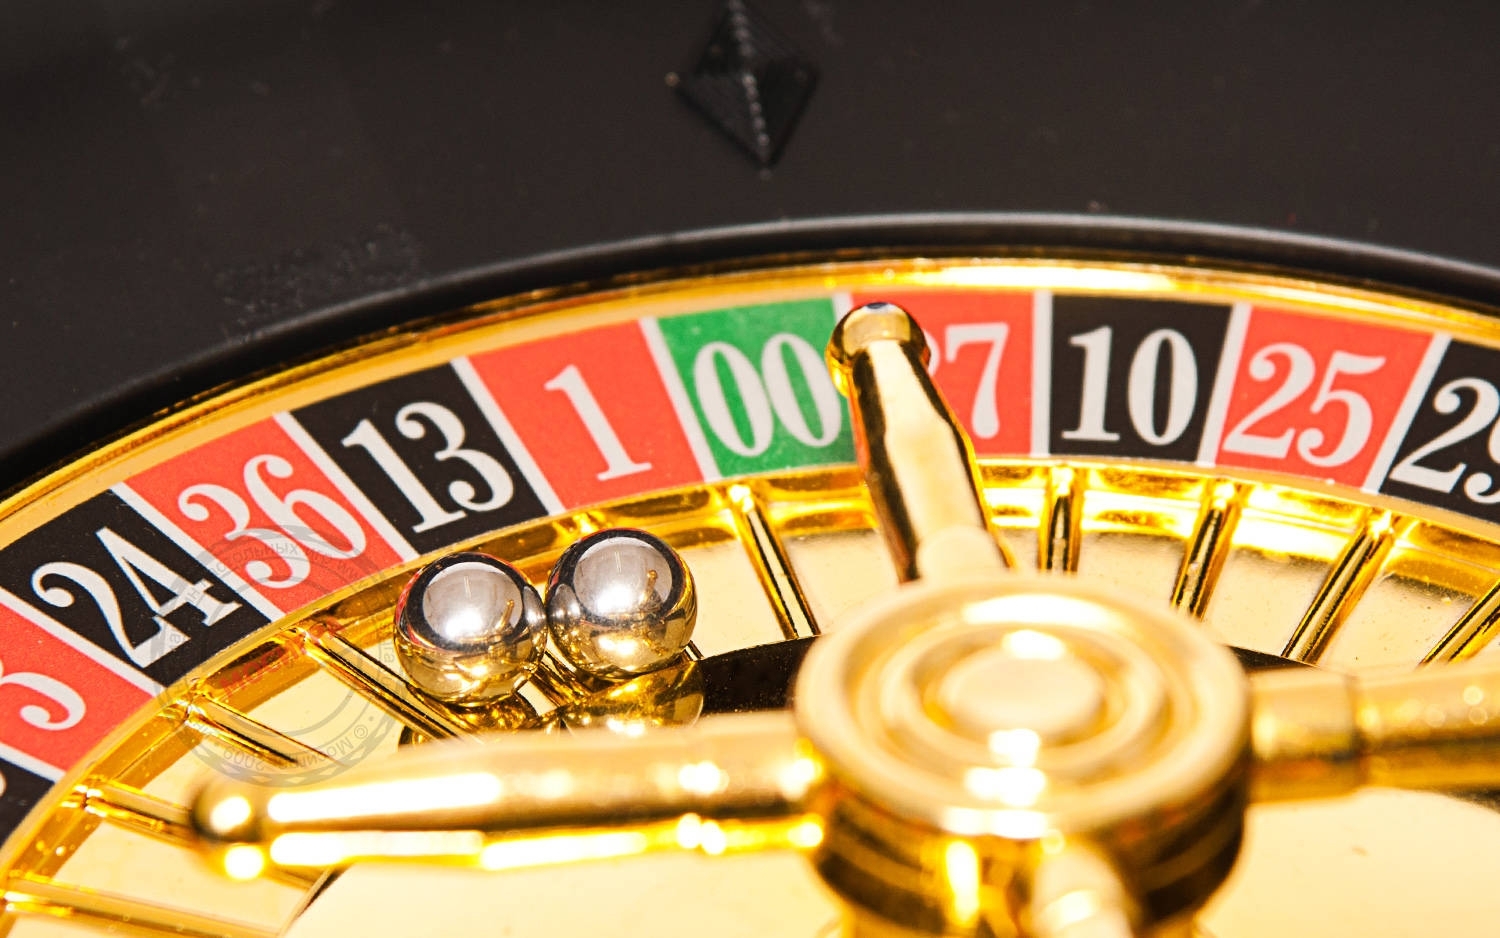 Полезно знать про рулетку в онлайн казино